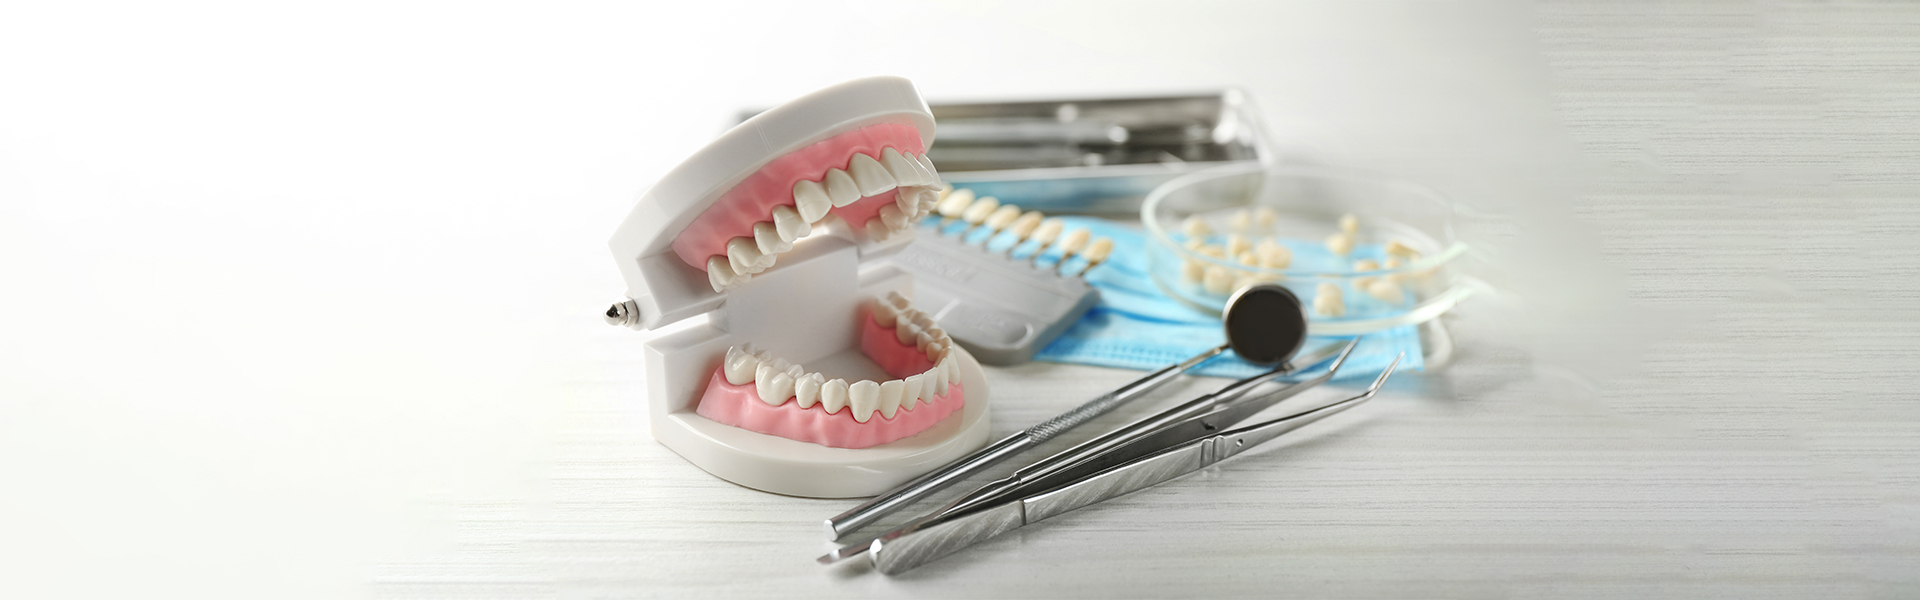 5 Things to Know Before Choosing a Dental Bridge